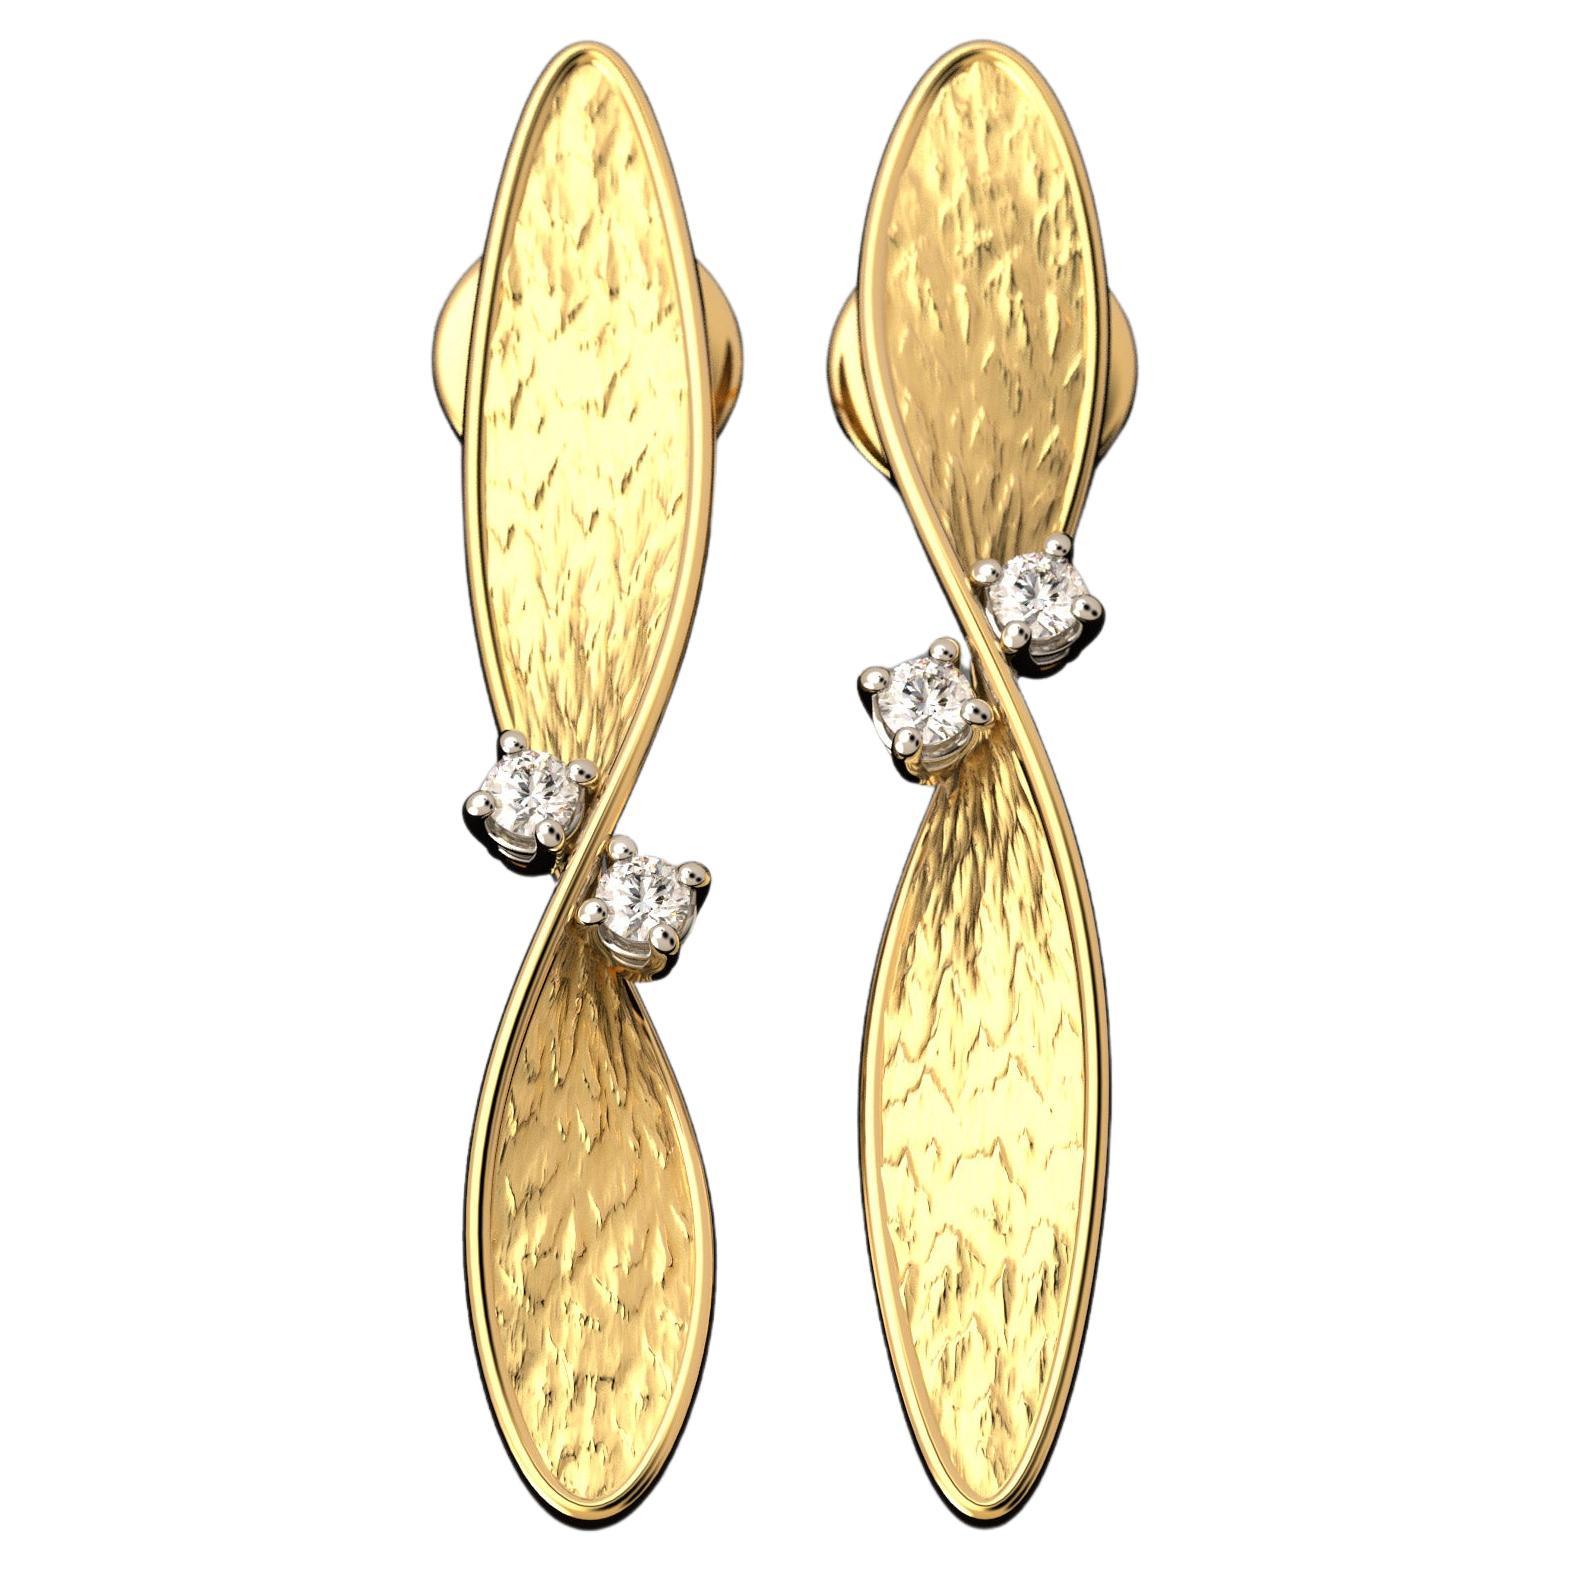 Share 152+ earrings made in italy - esthdonghoadian